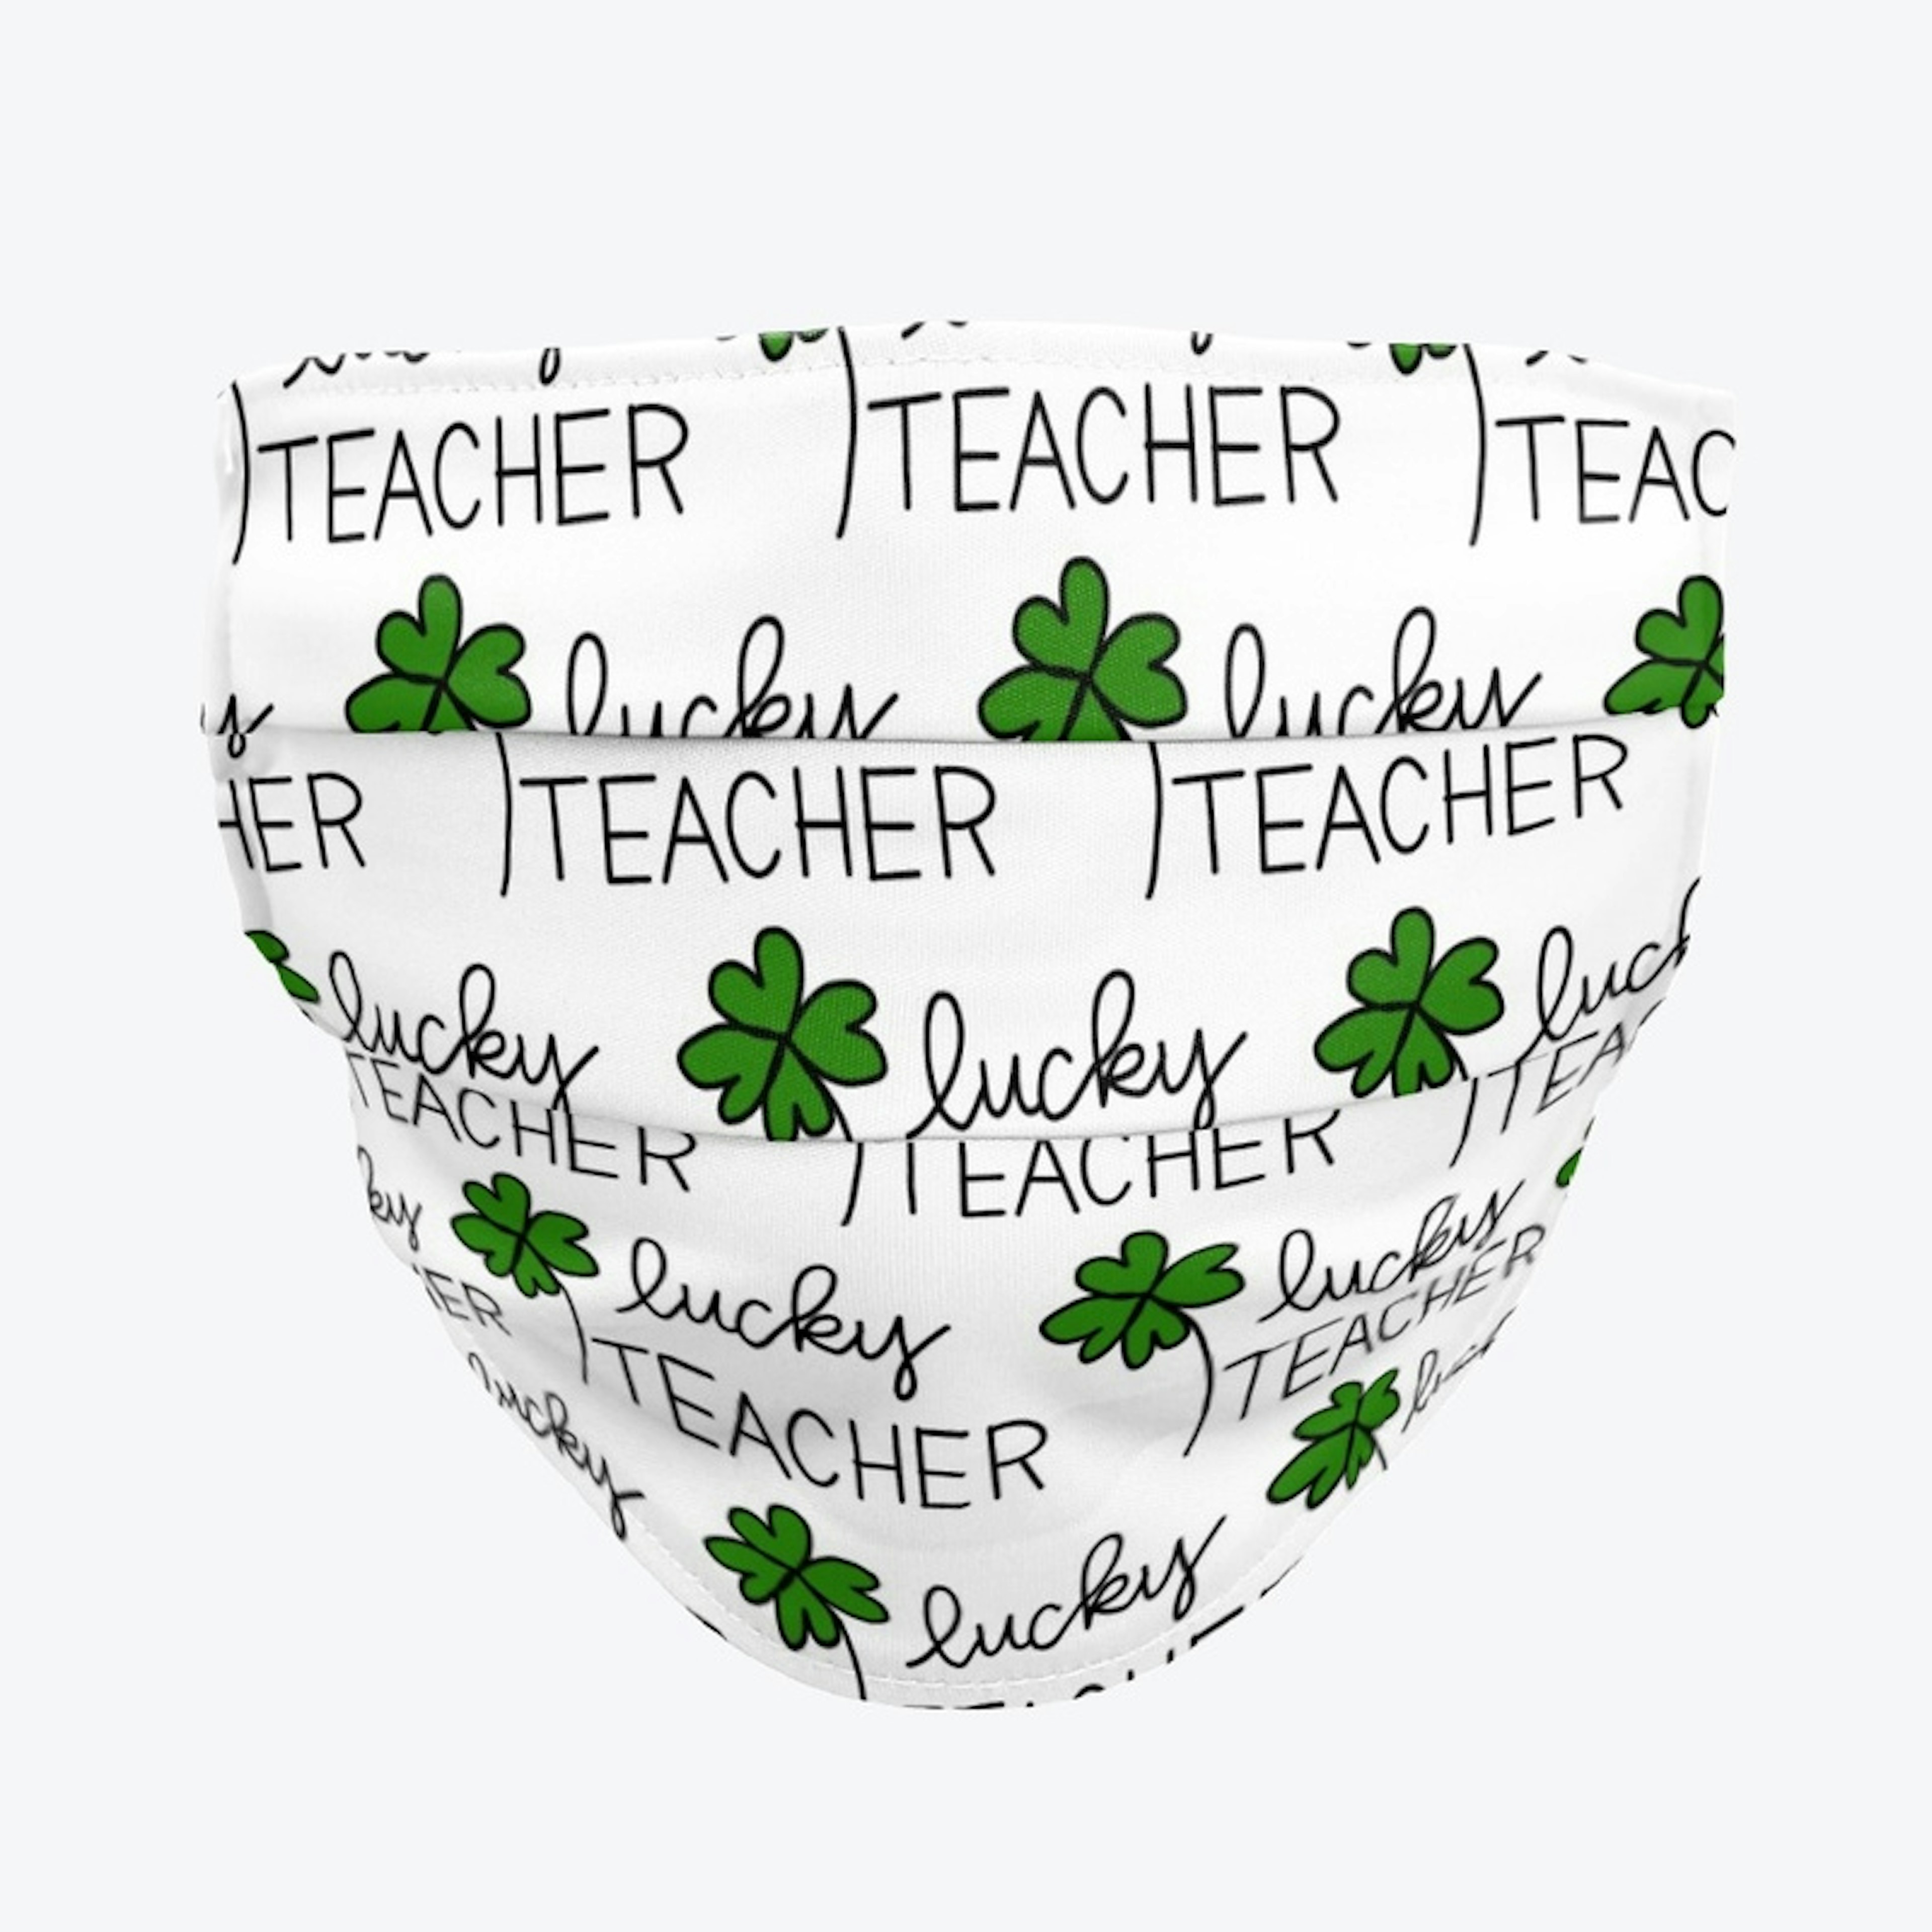 Teacher Mash - Lucky Teacher 